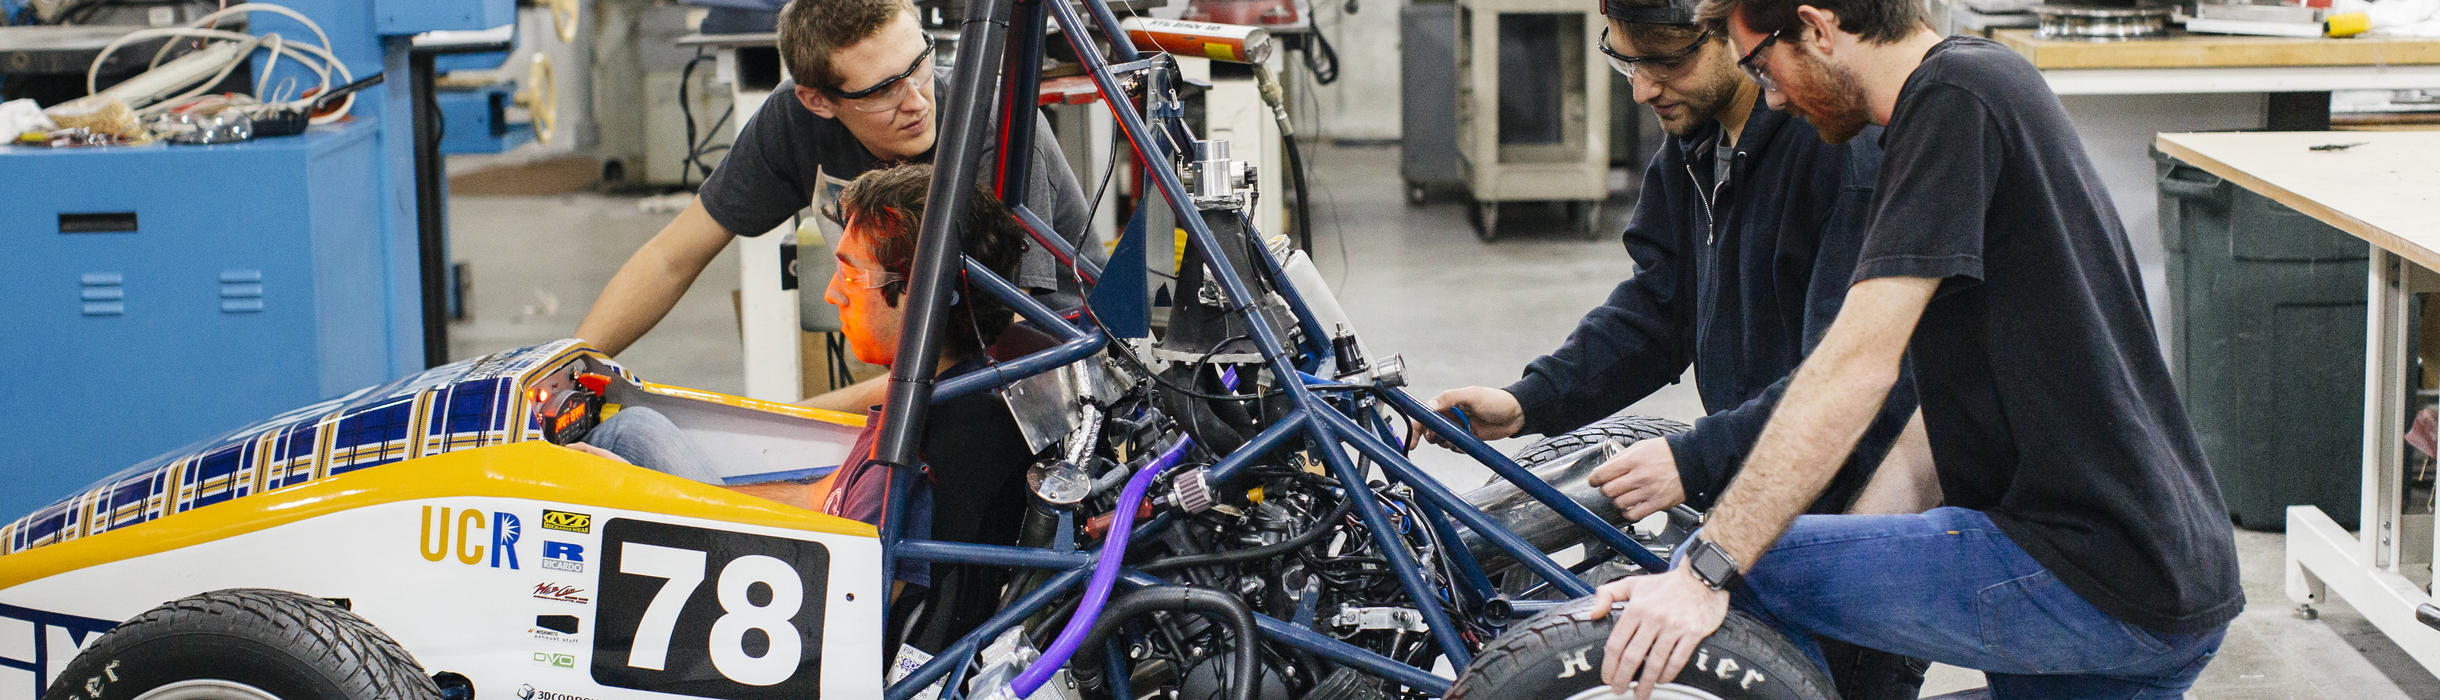 Mechanical Engineering Extends Beyond Cars